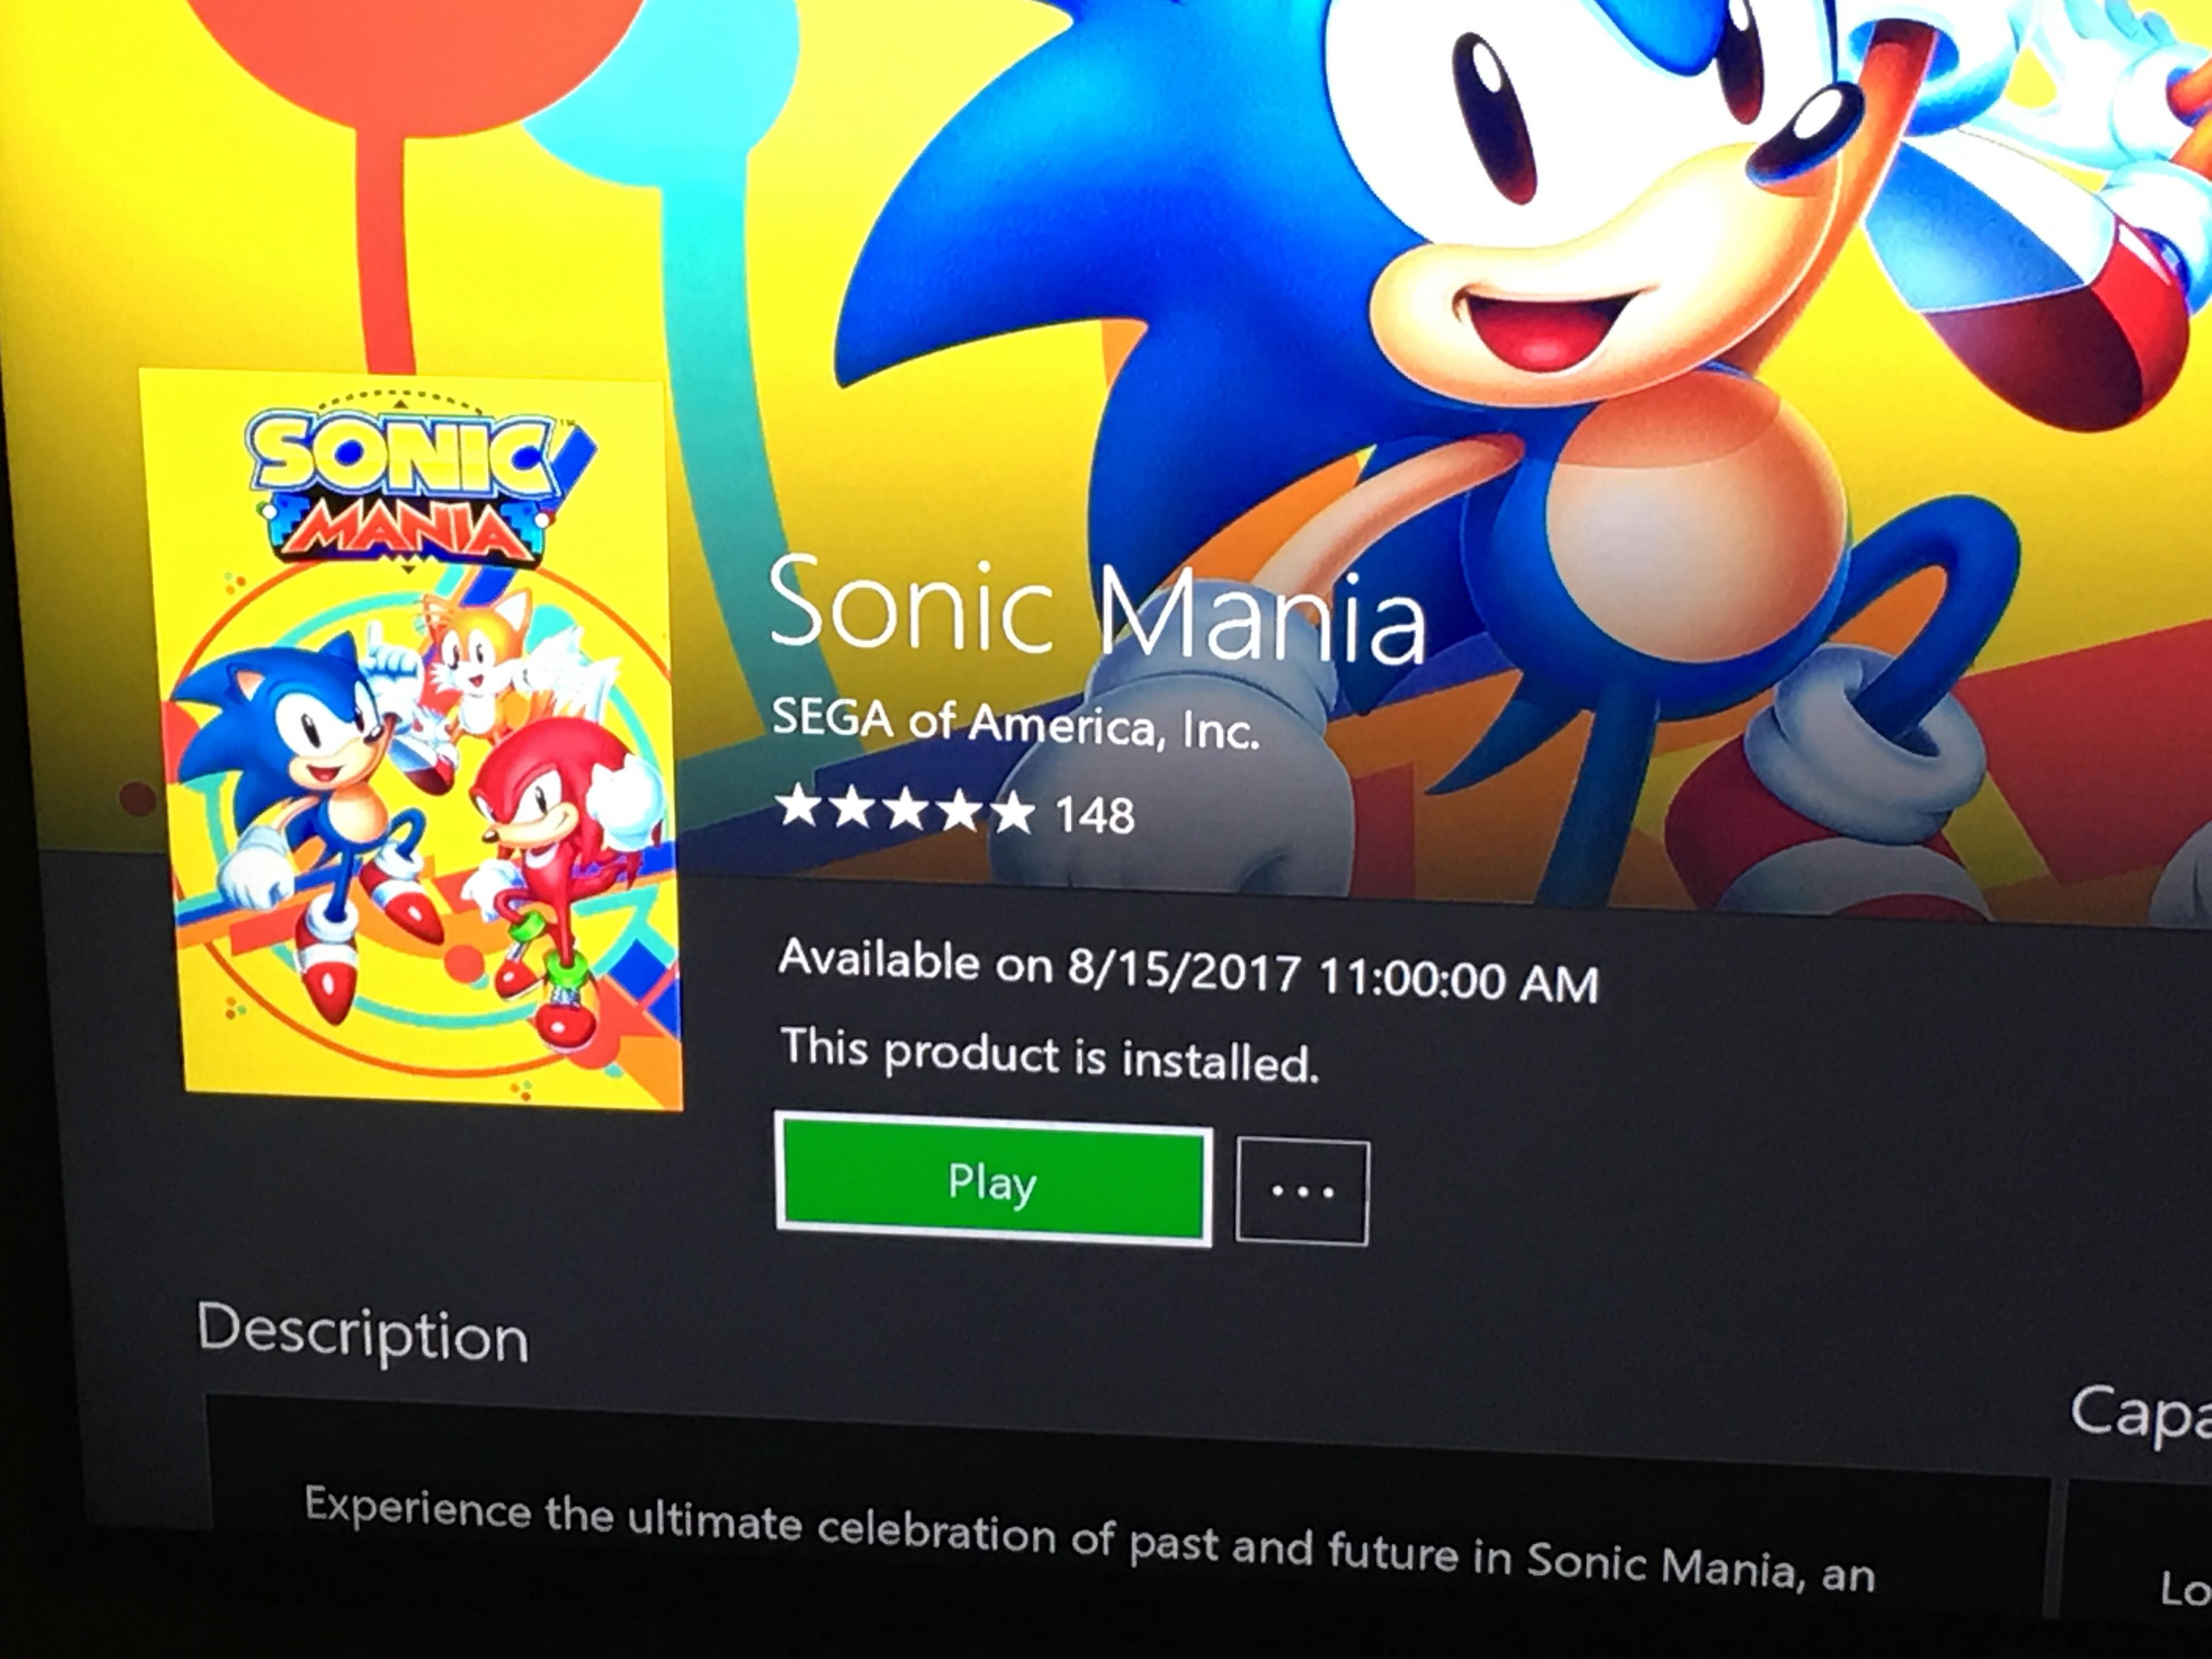 Sonic mania adventures 2 download pc